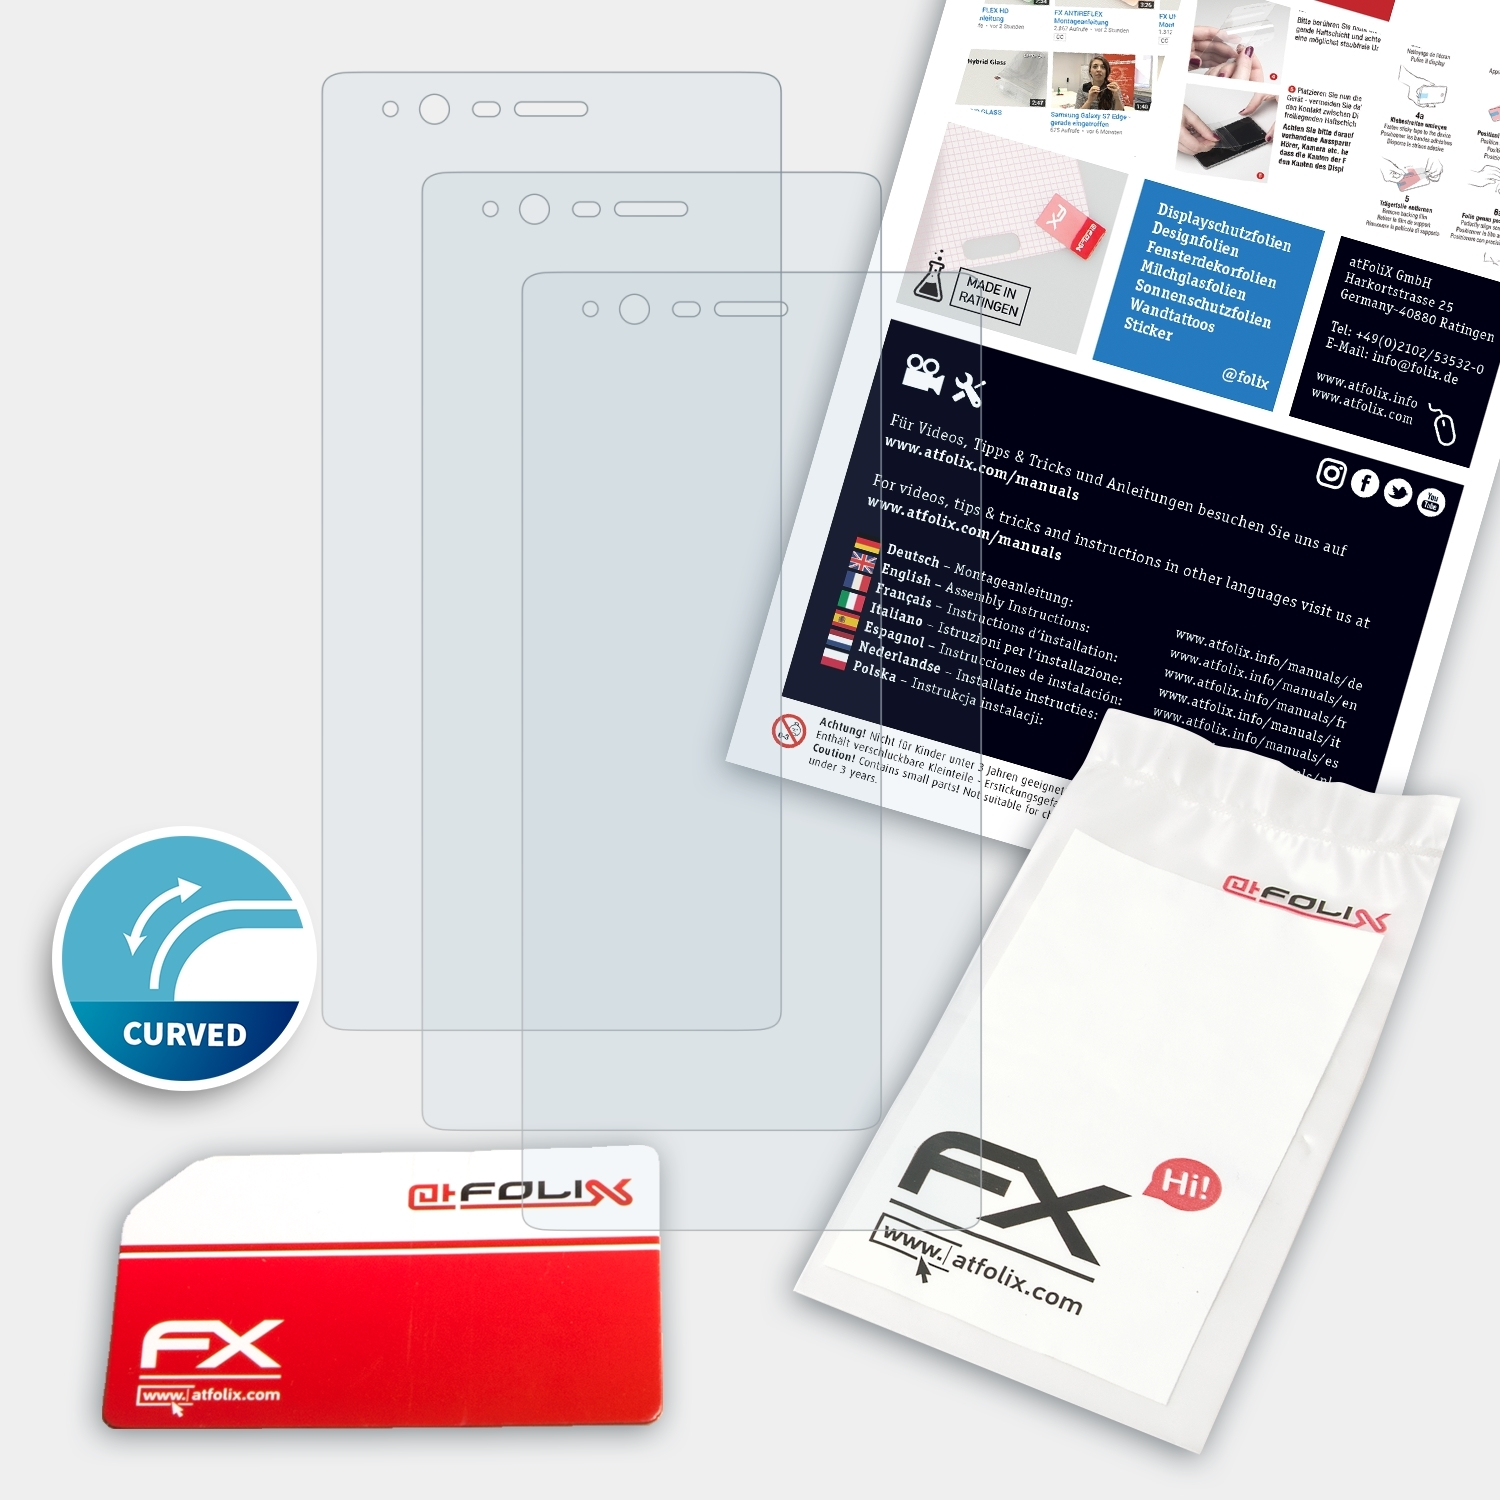 Nokia 3) 3x FX-ActiFleX Displayschutz(für ATFOLIX